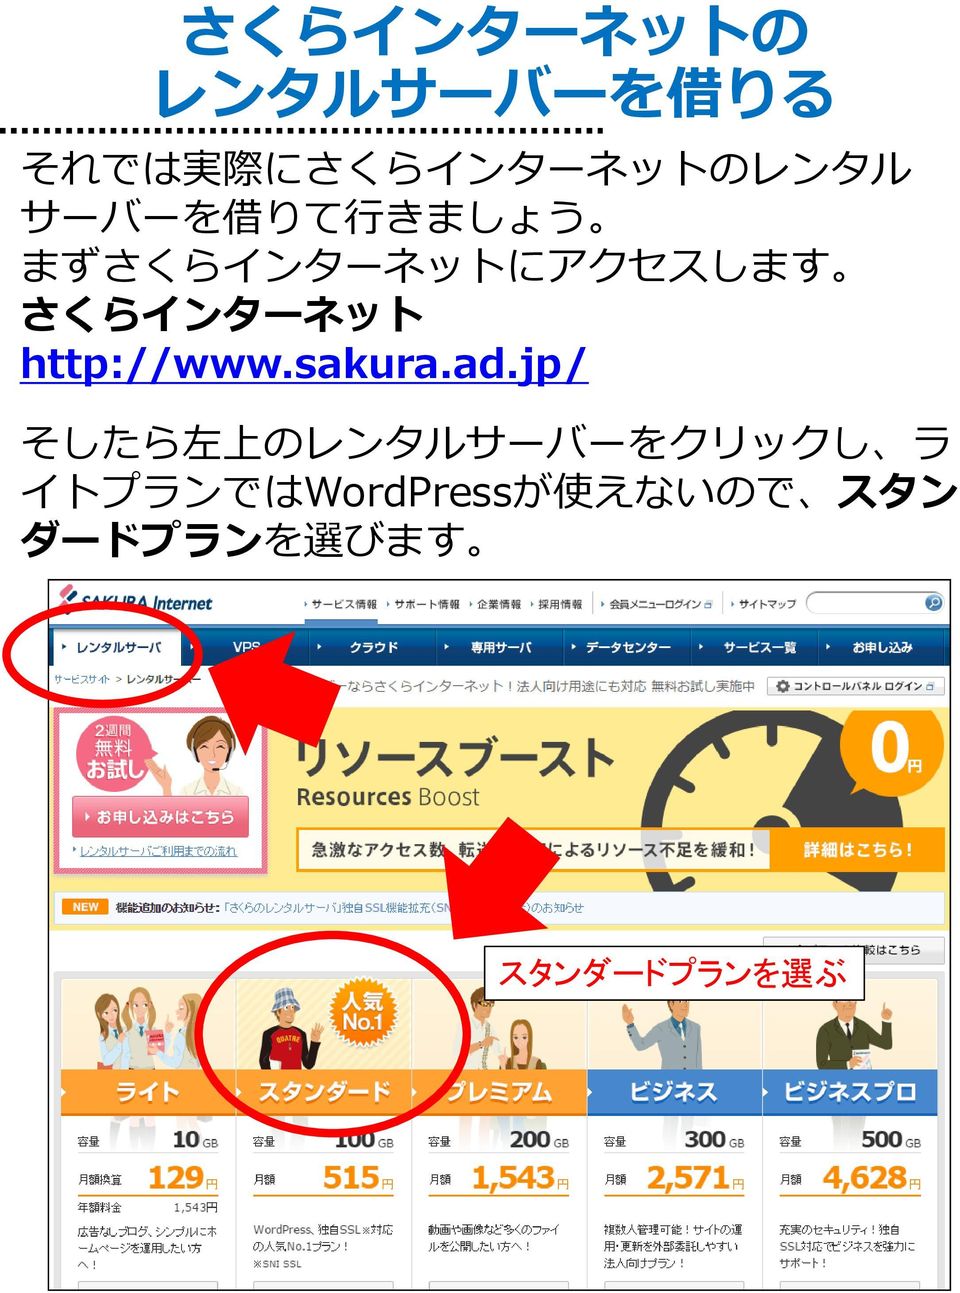 http://www.sakura.ad.